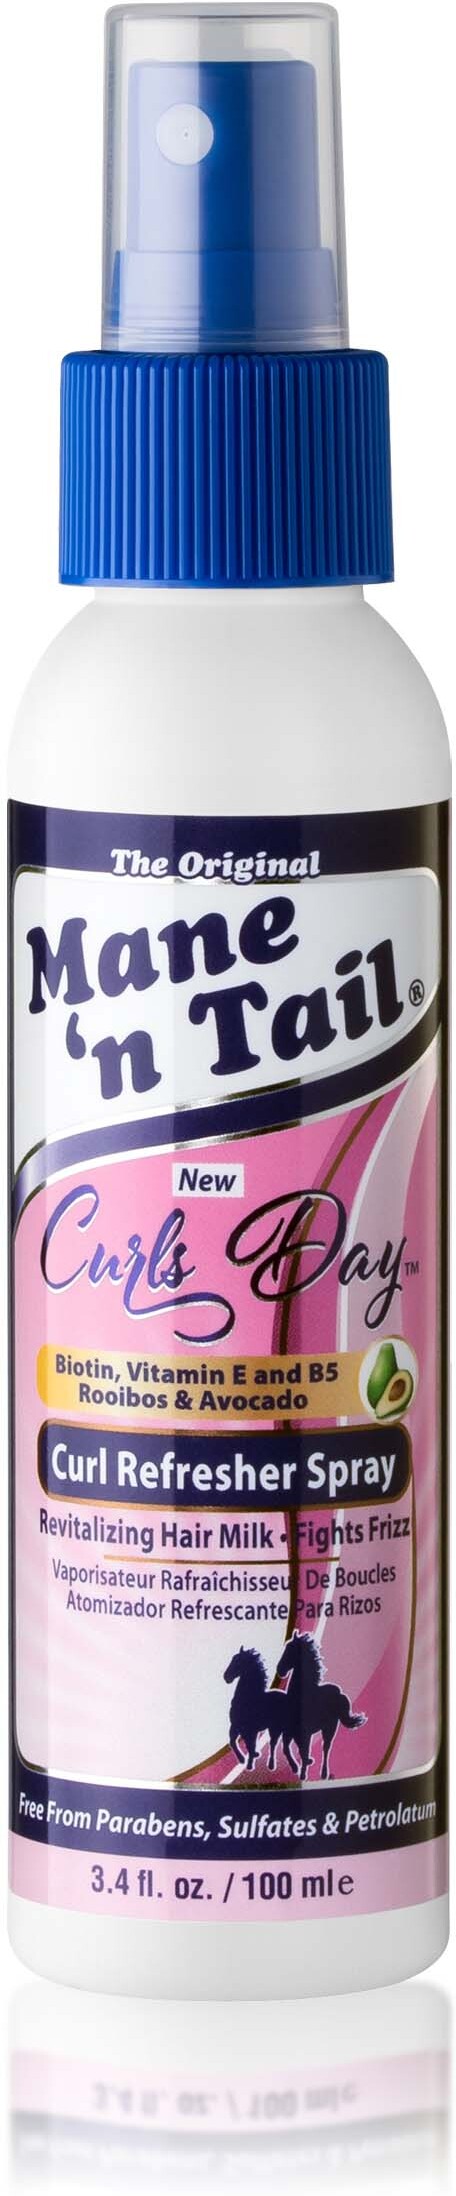 Mane 'n Tail Curls Day Curl Refresher Spray 102 ml